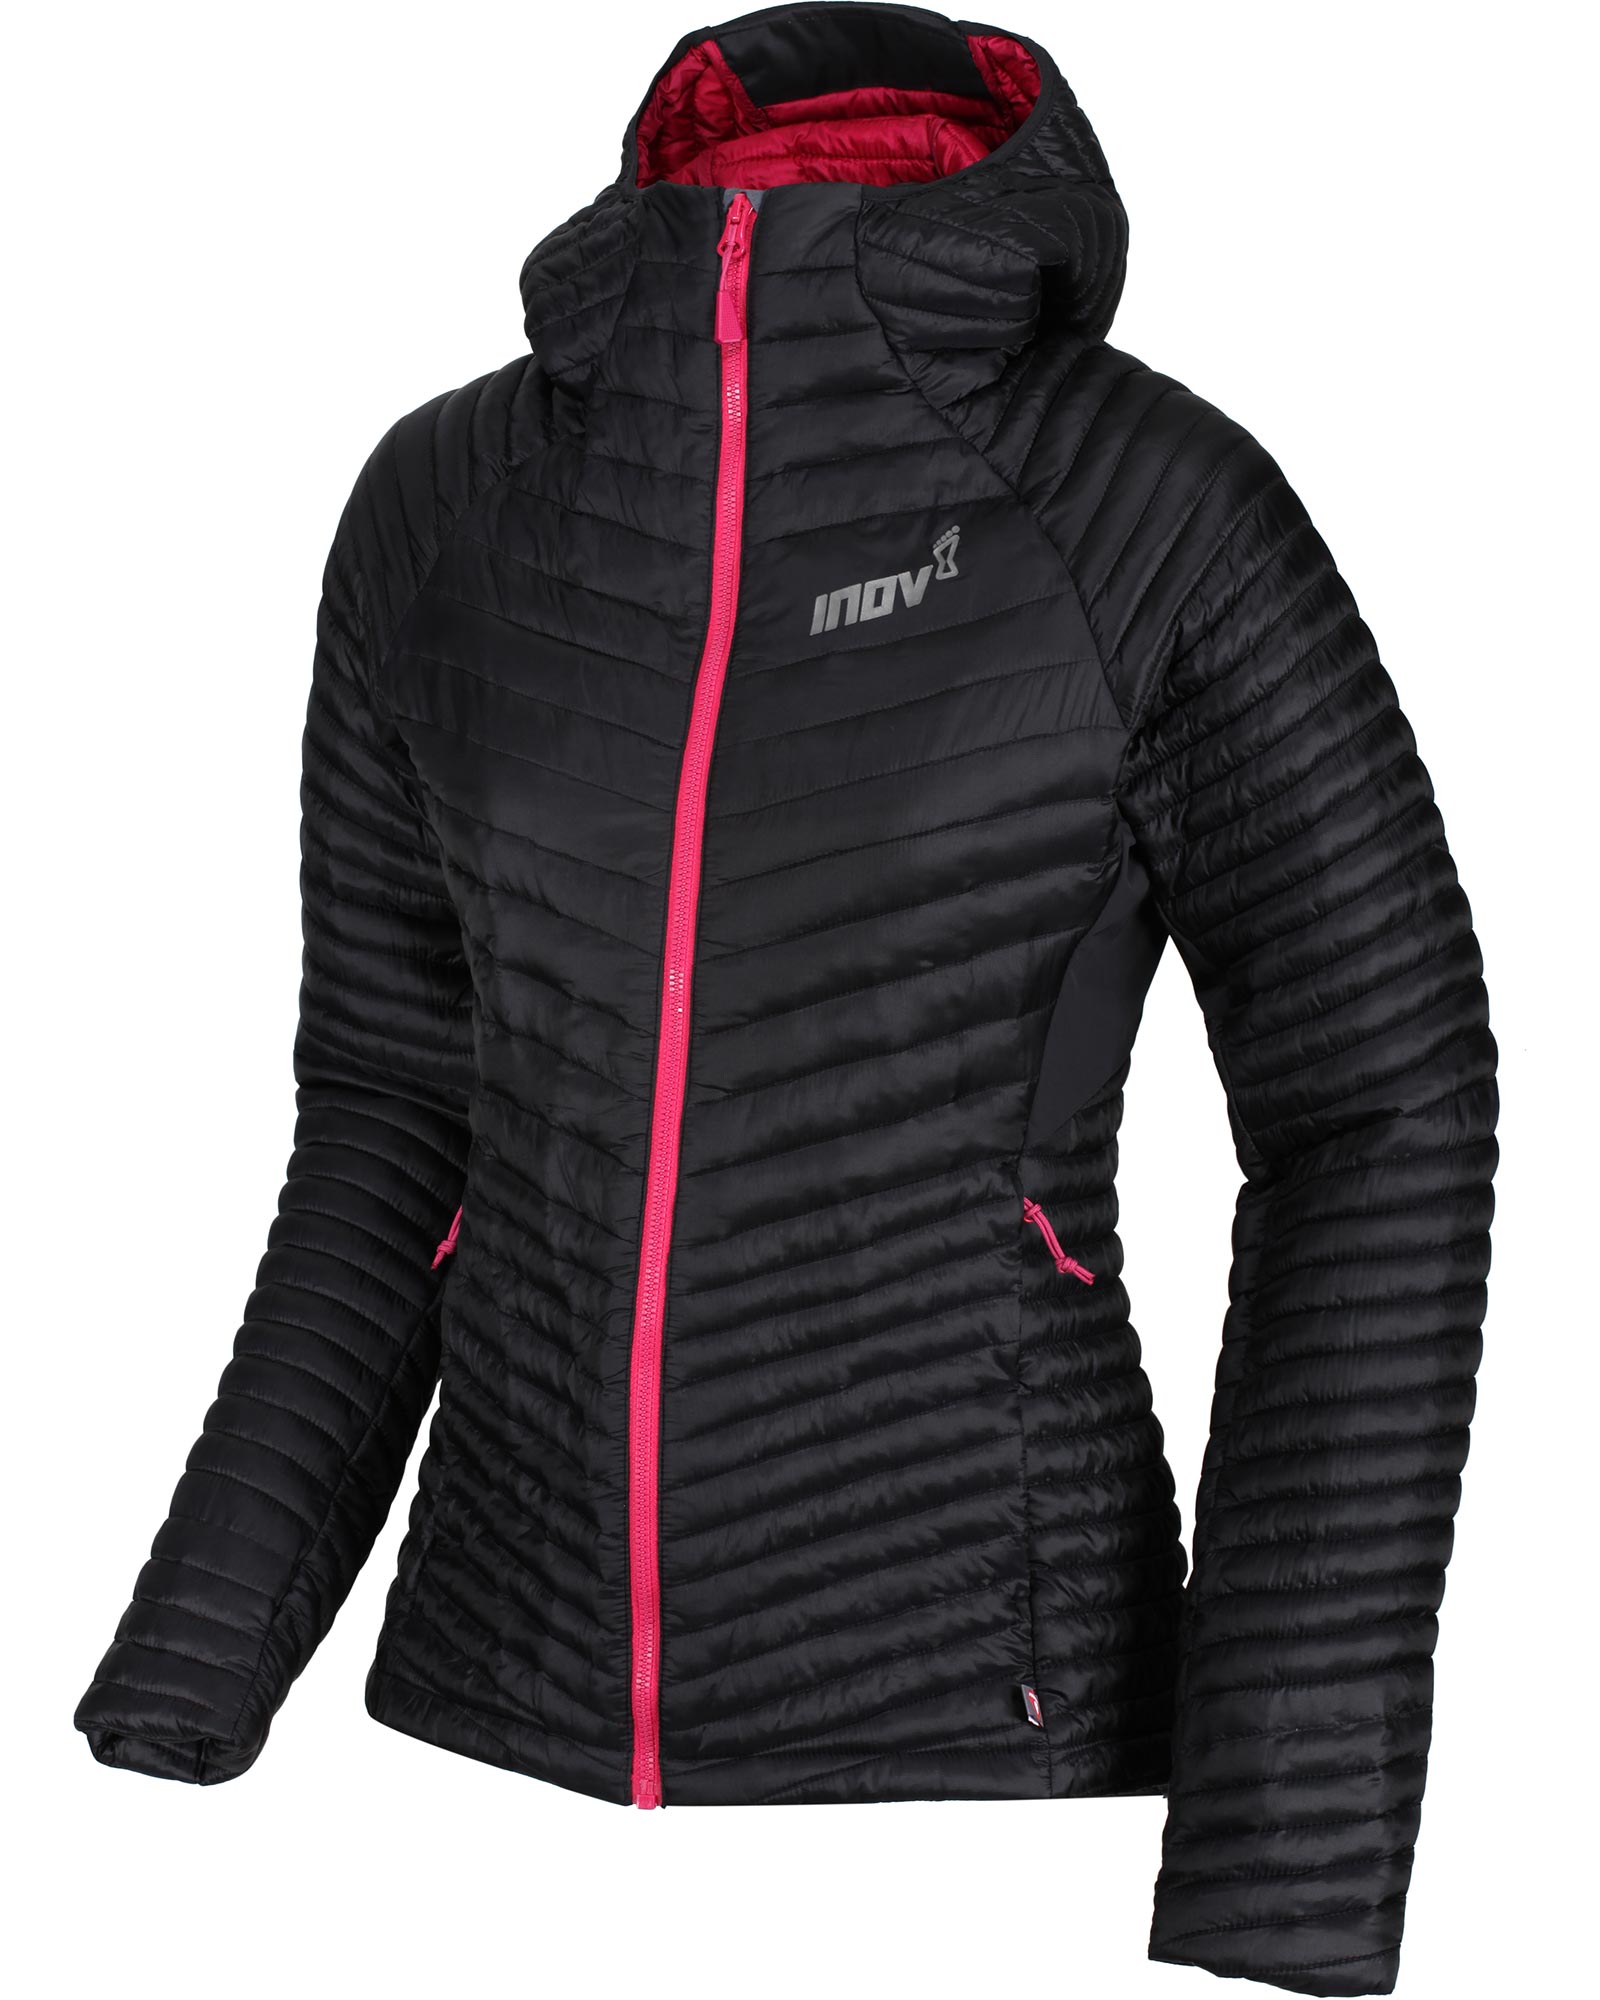 Inov 8 Full Zip Thermoshell Pro Women’s Jacket - black 10